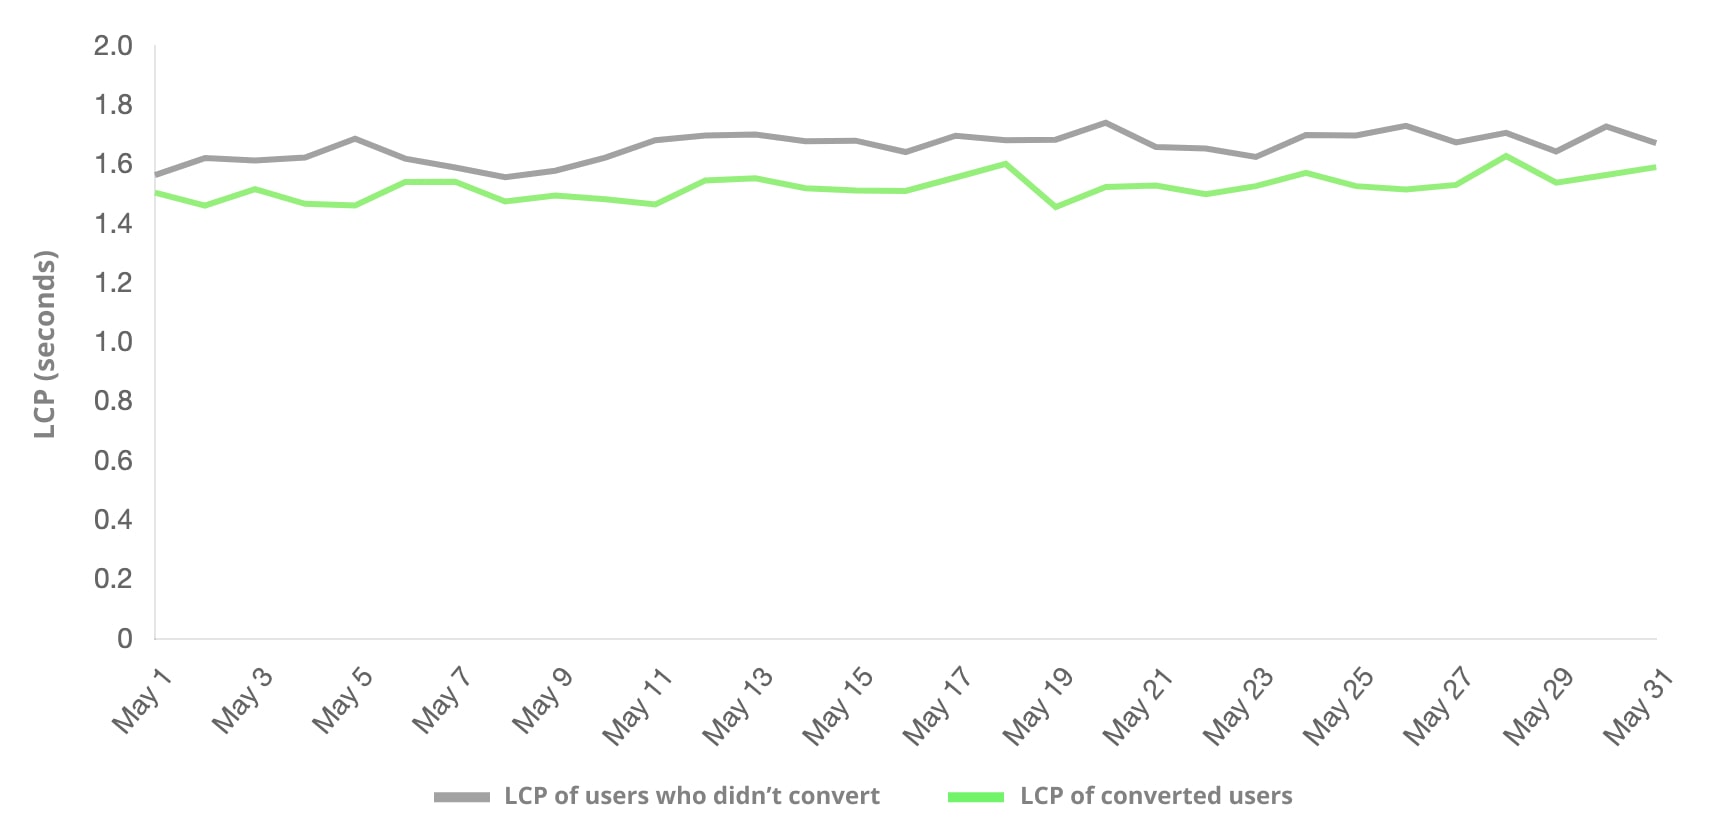 LCP 別に、コンバージョンに至ったユーザーと至らなかったユーザーの比較。コンバージョンに至る頻度の高いユーザー グループの LCP は低い。